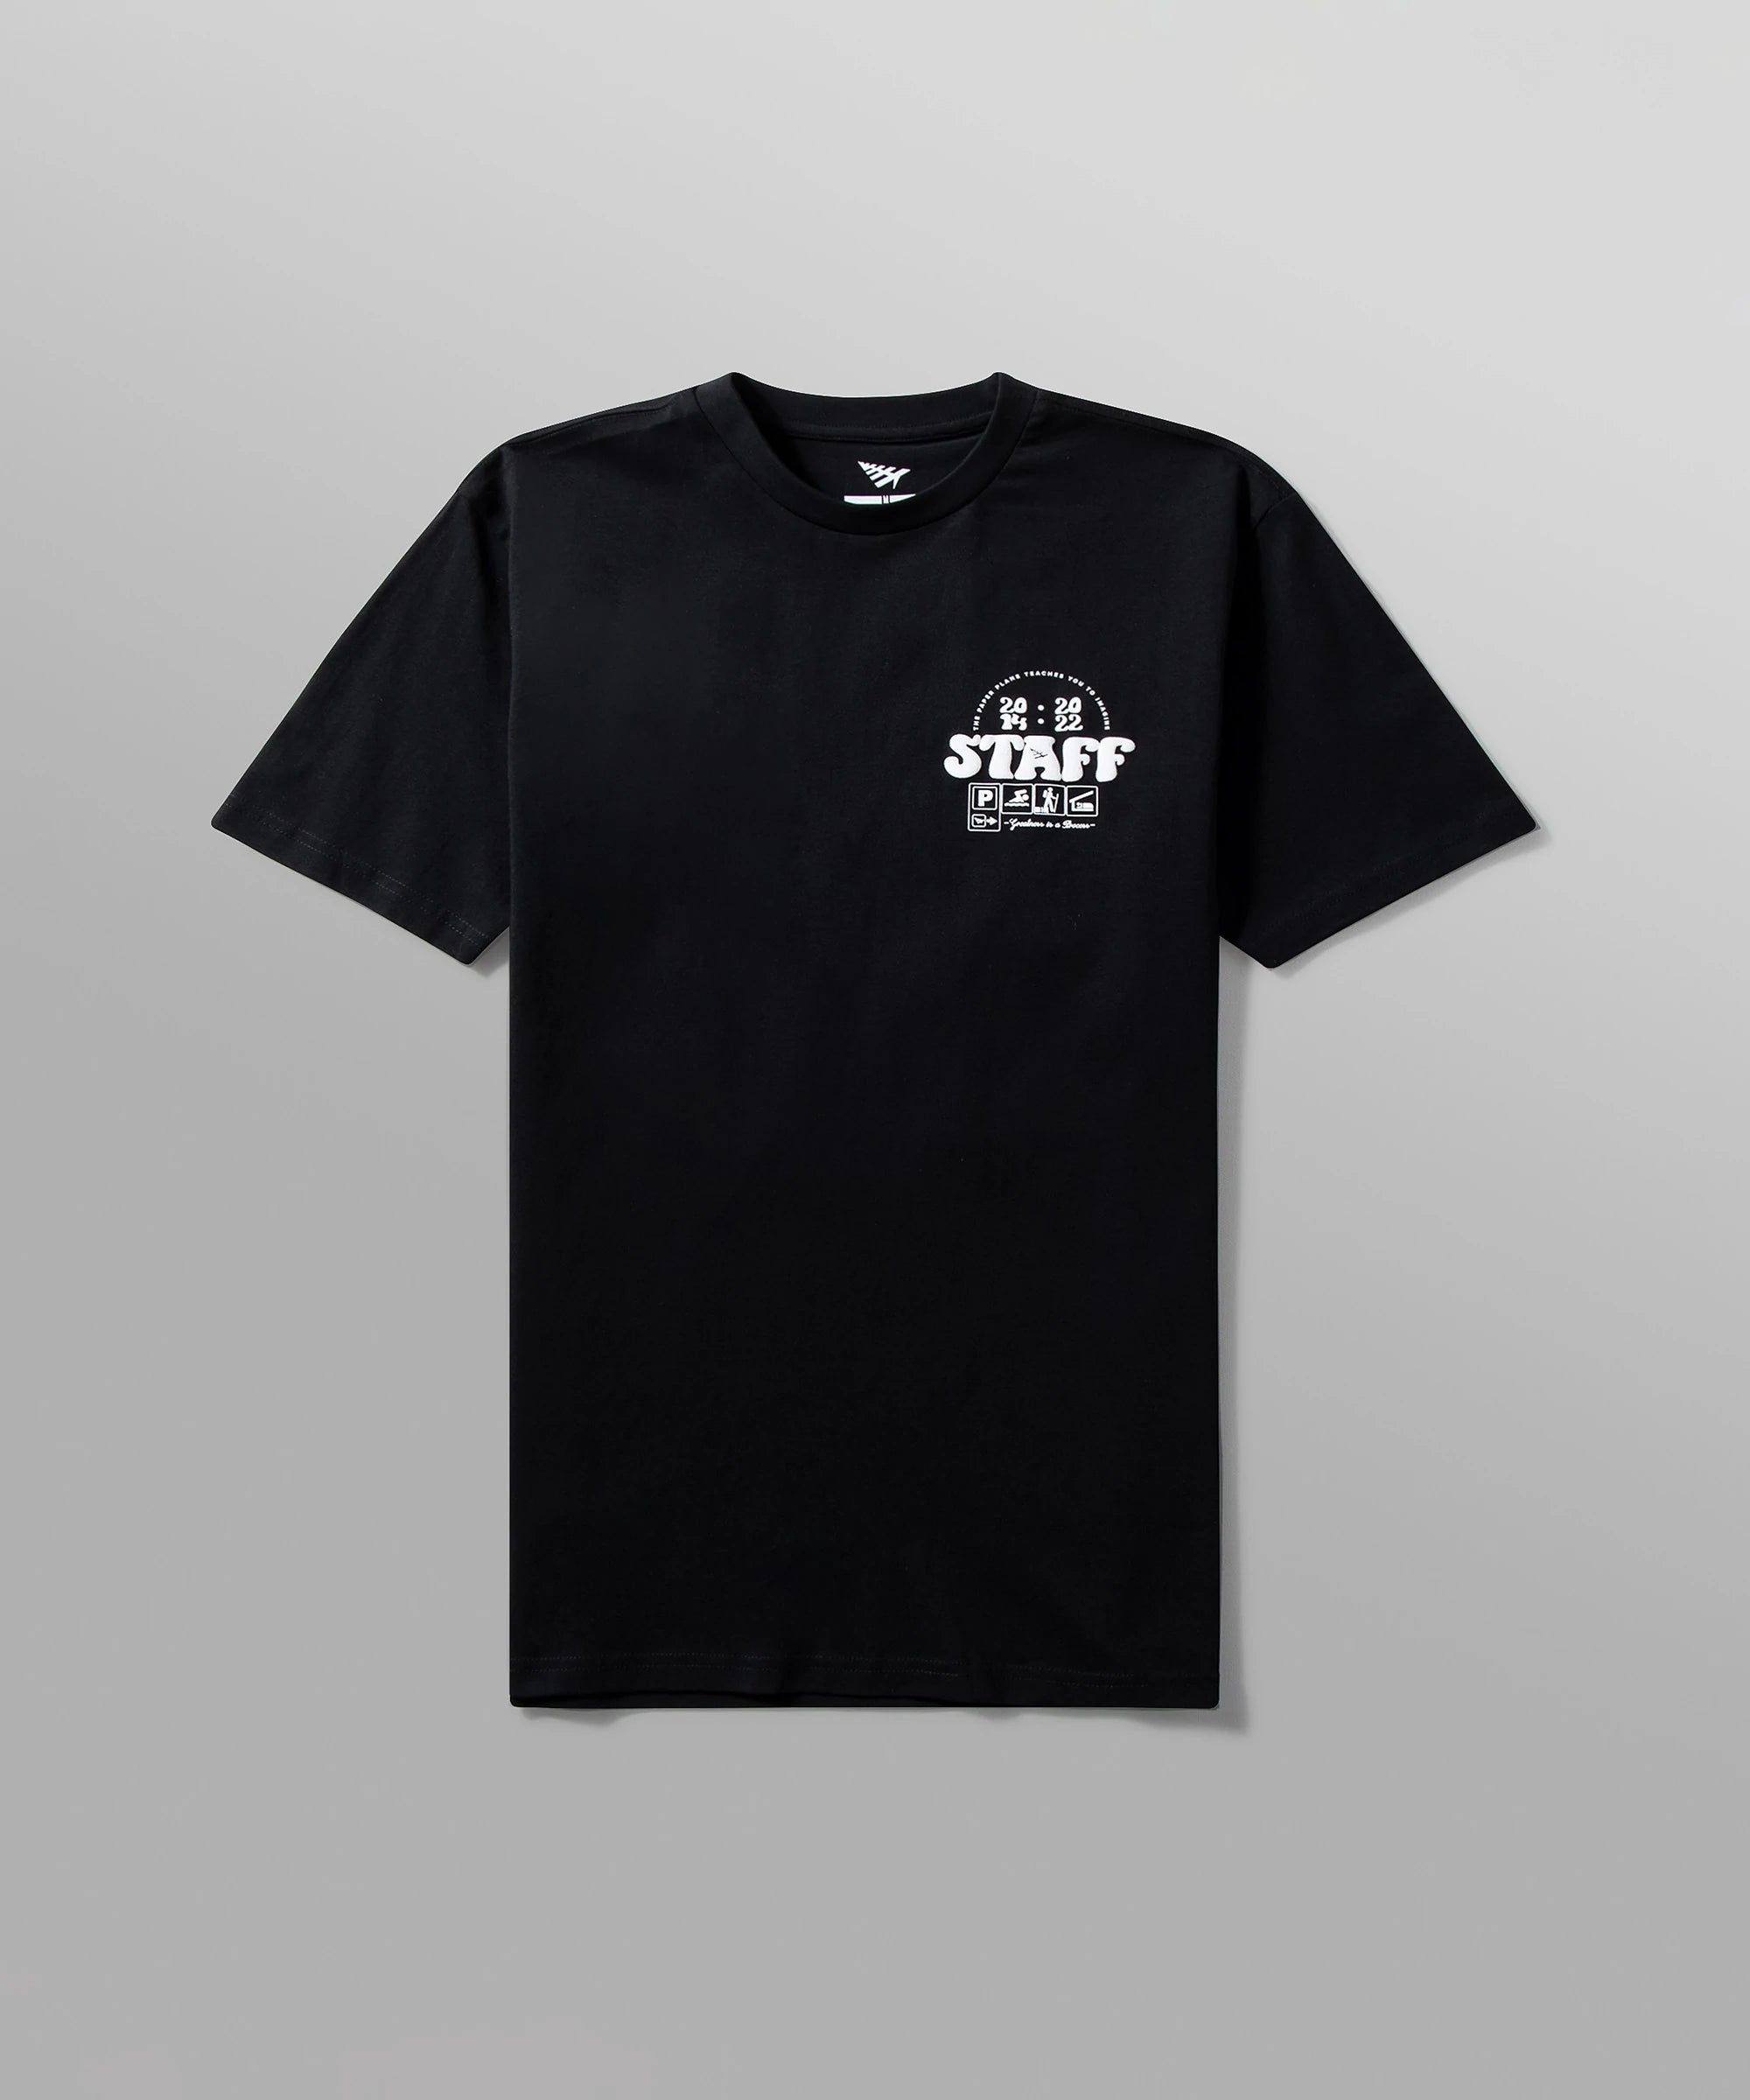 Paper Plane T-Shirt white or black – Attaboy Cocktail Bar